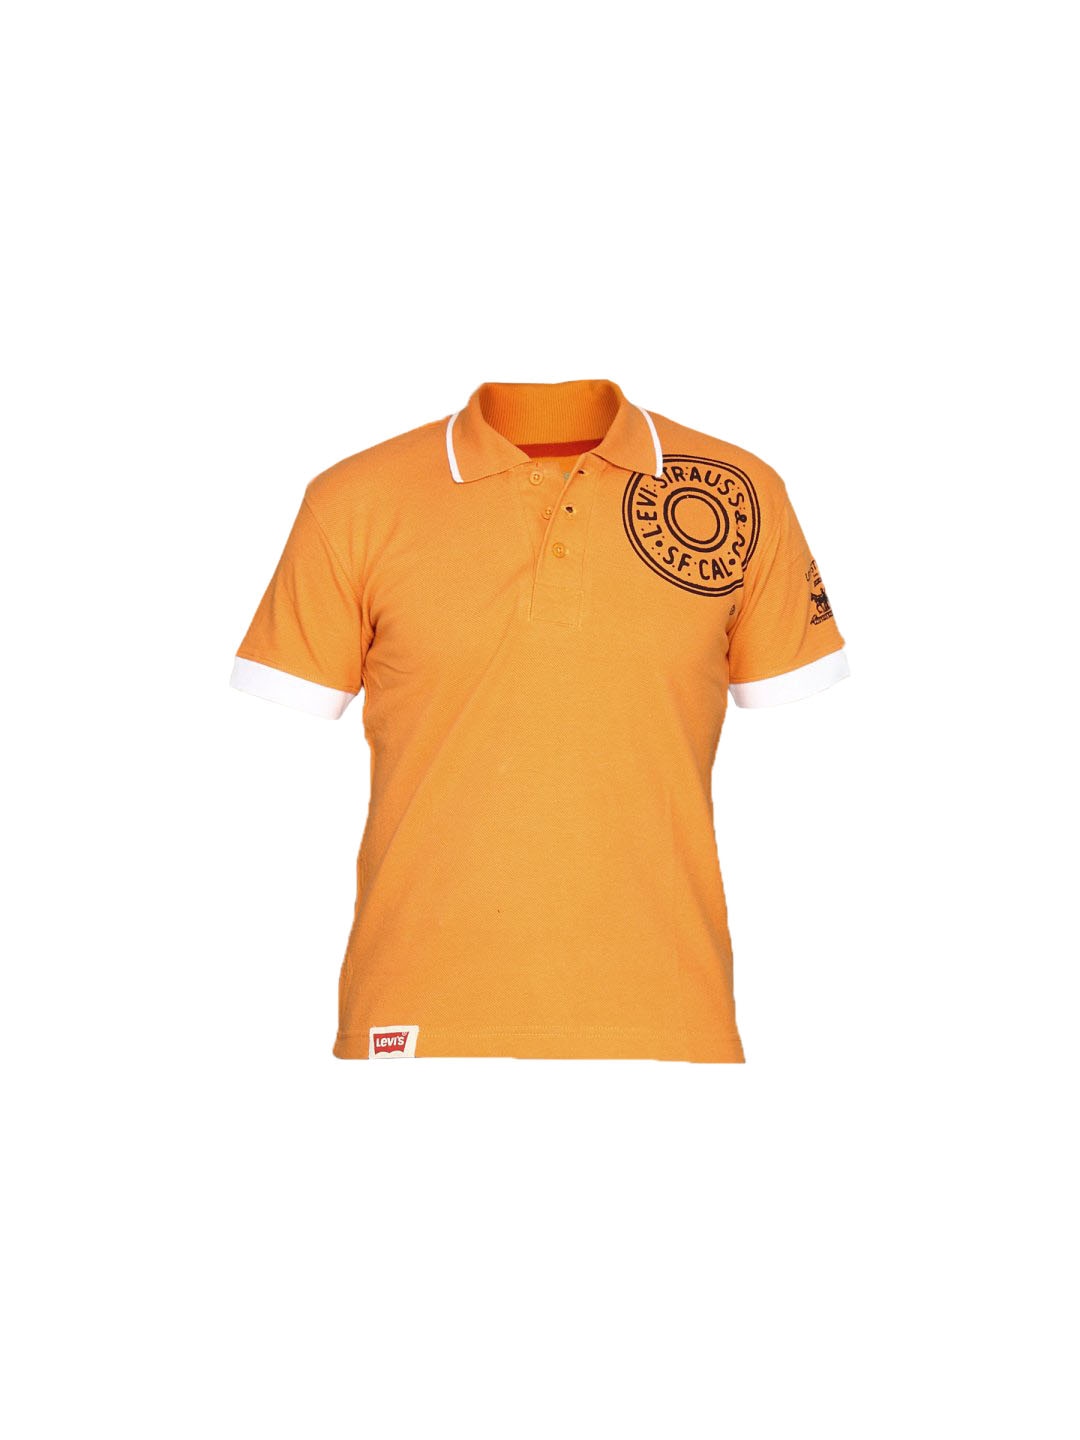 Levis Kids Boy's Darby Orange Polo Tshirt